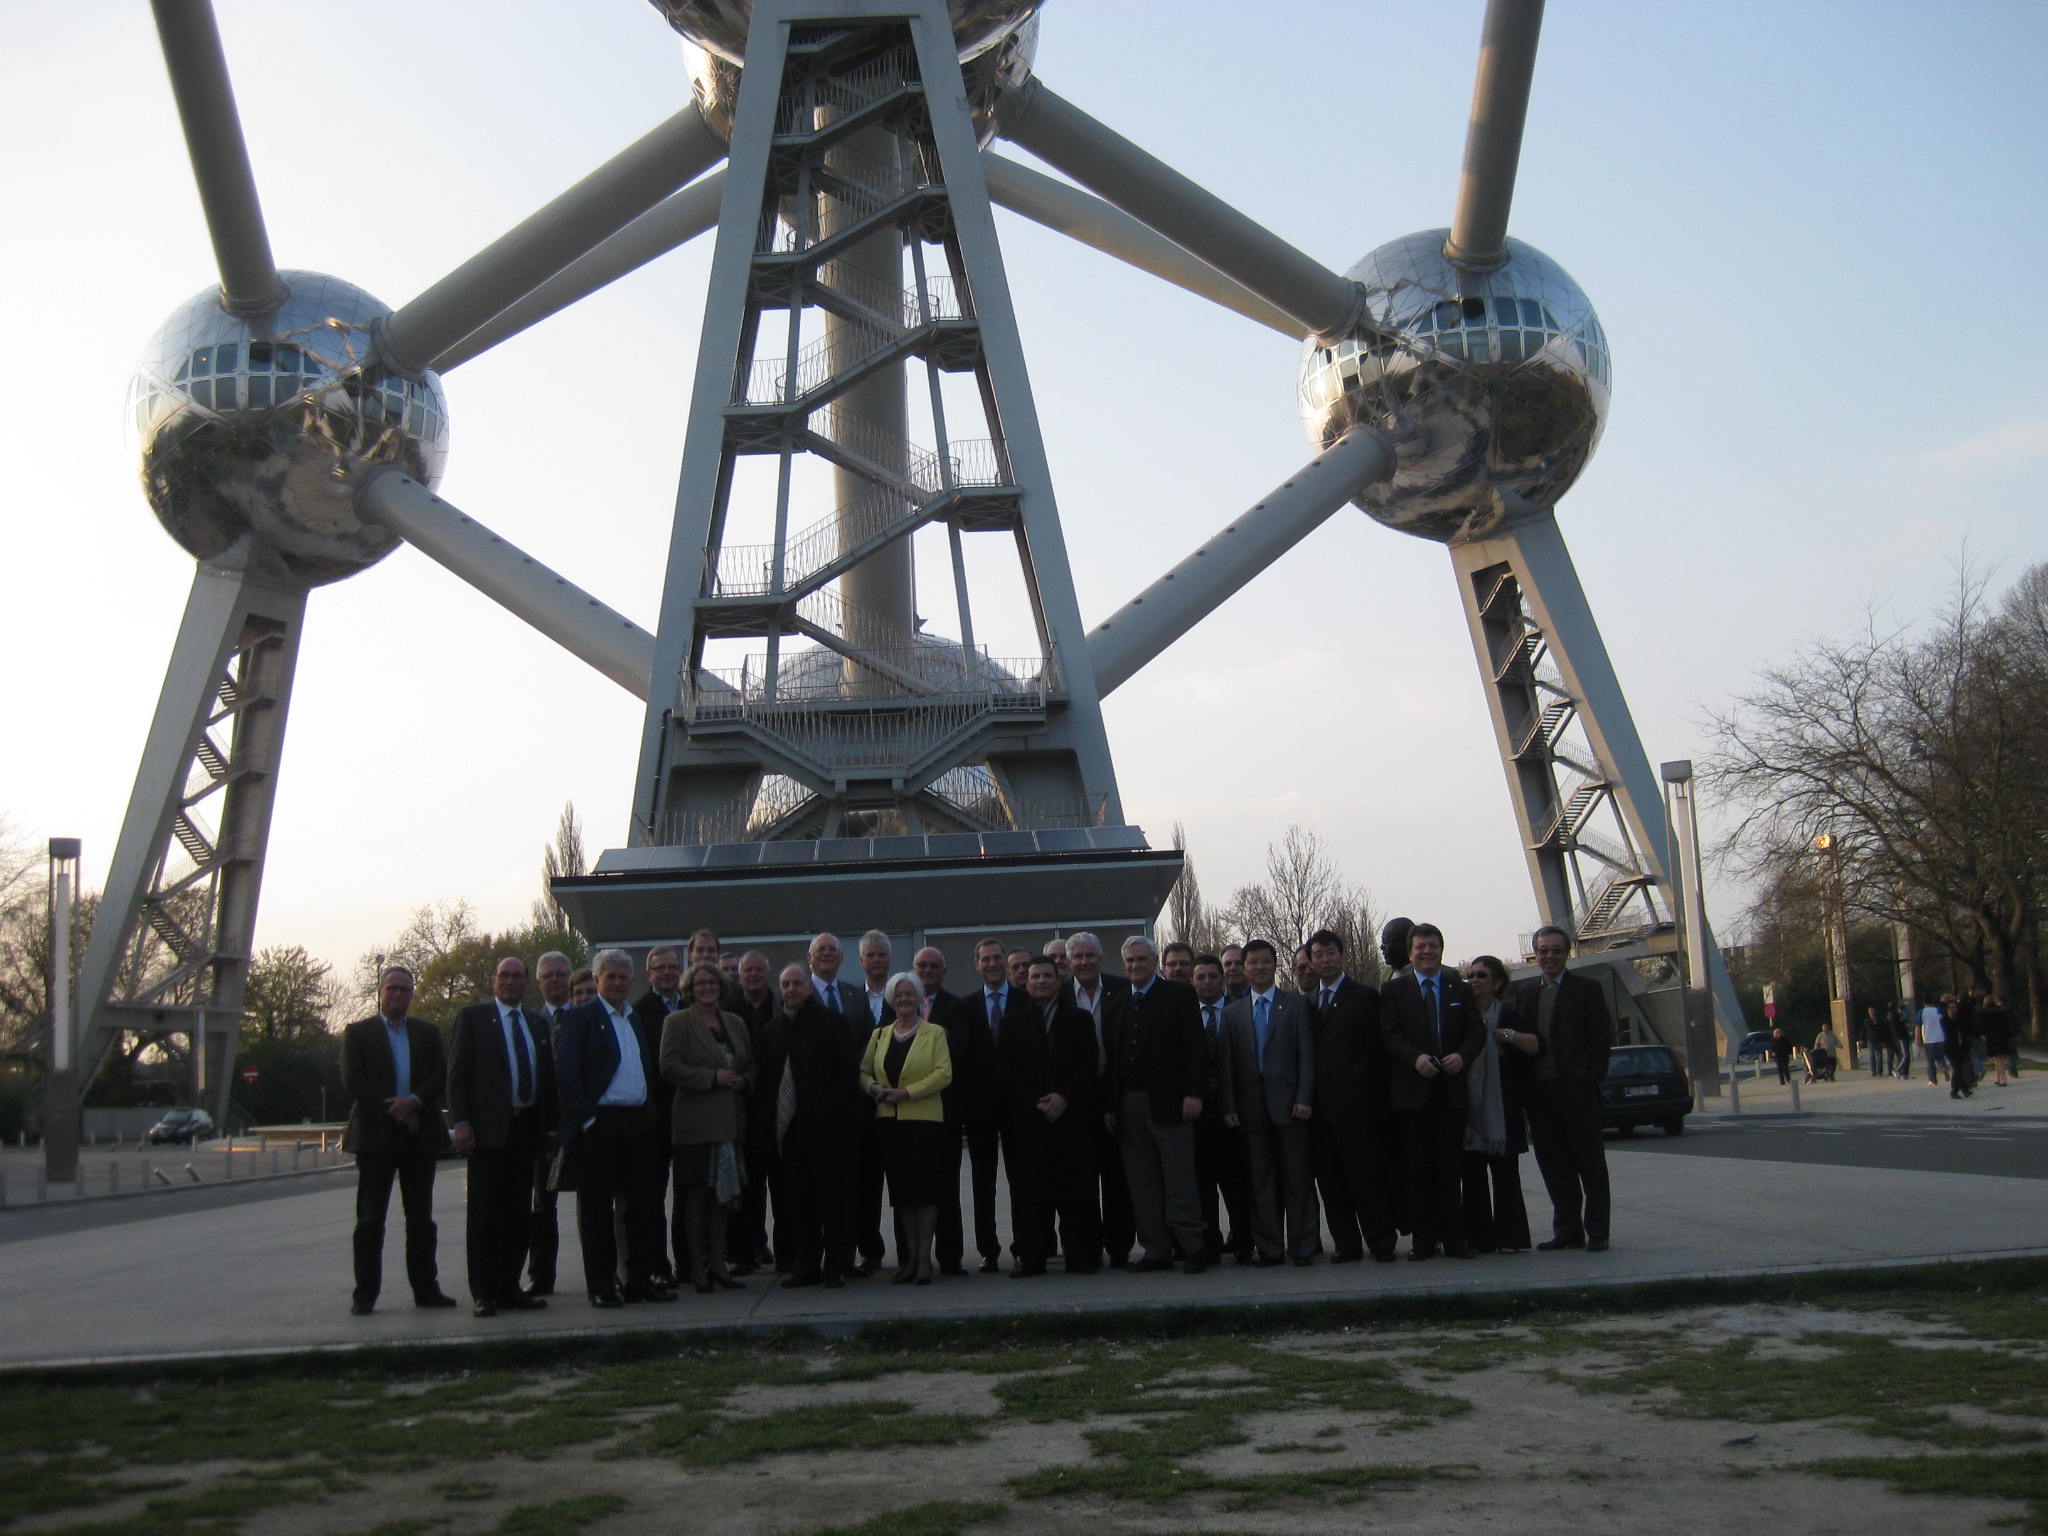 The OCEAN Board meeting 2010 took place in Brussels in April